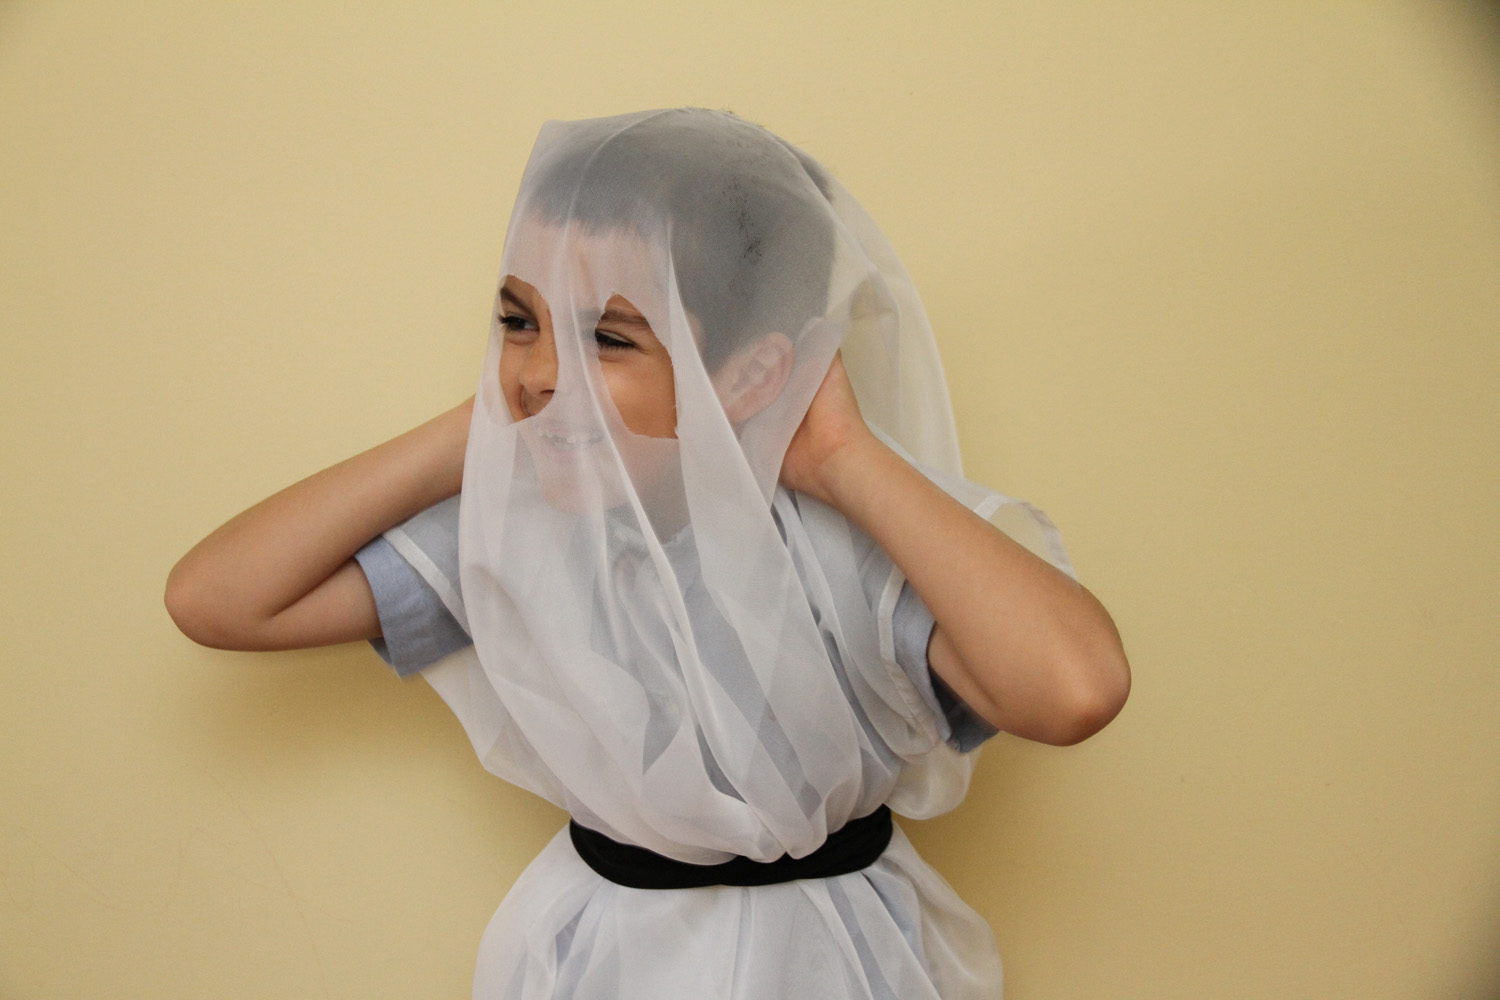 Child in DIY ghost costume